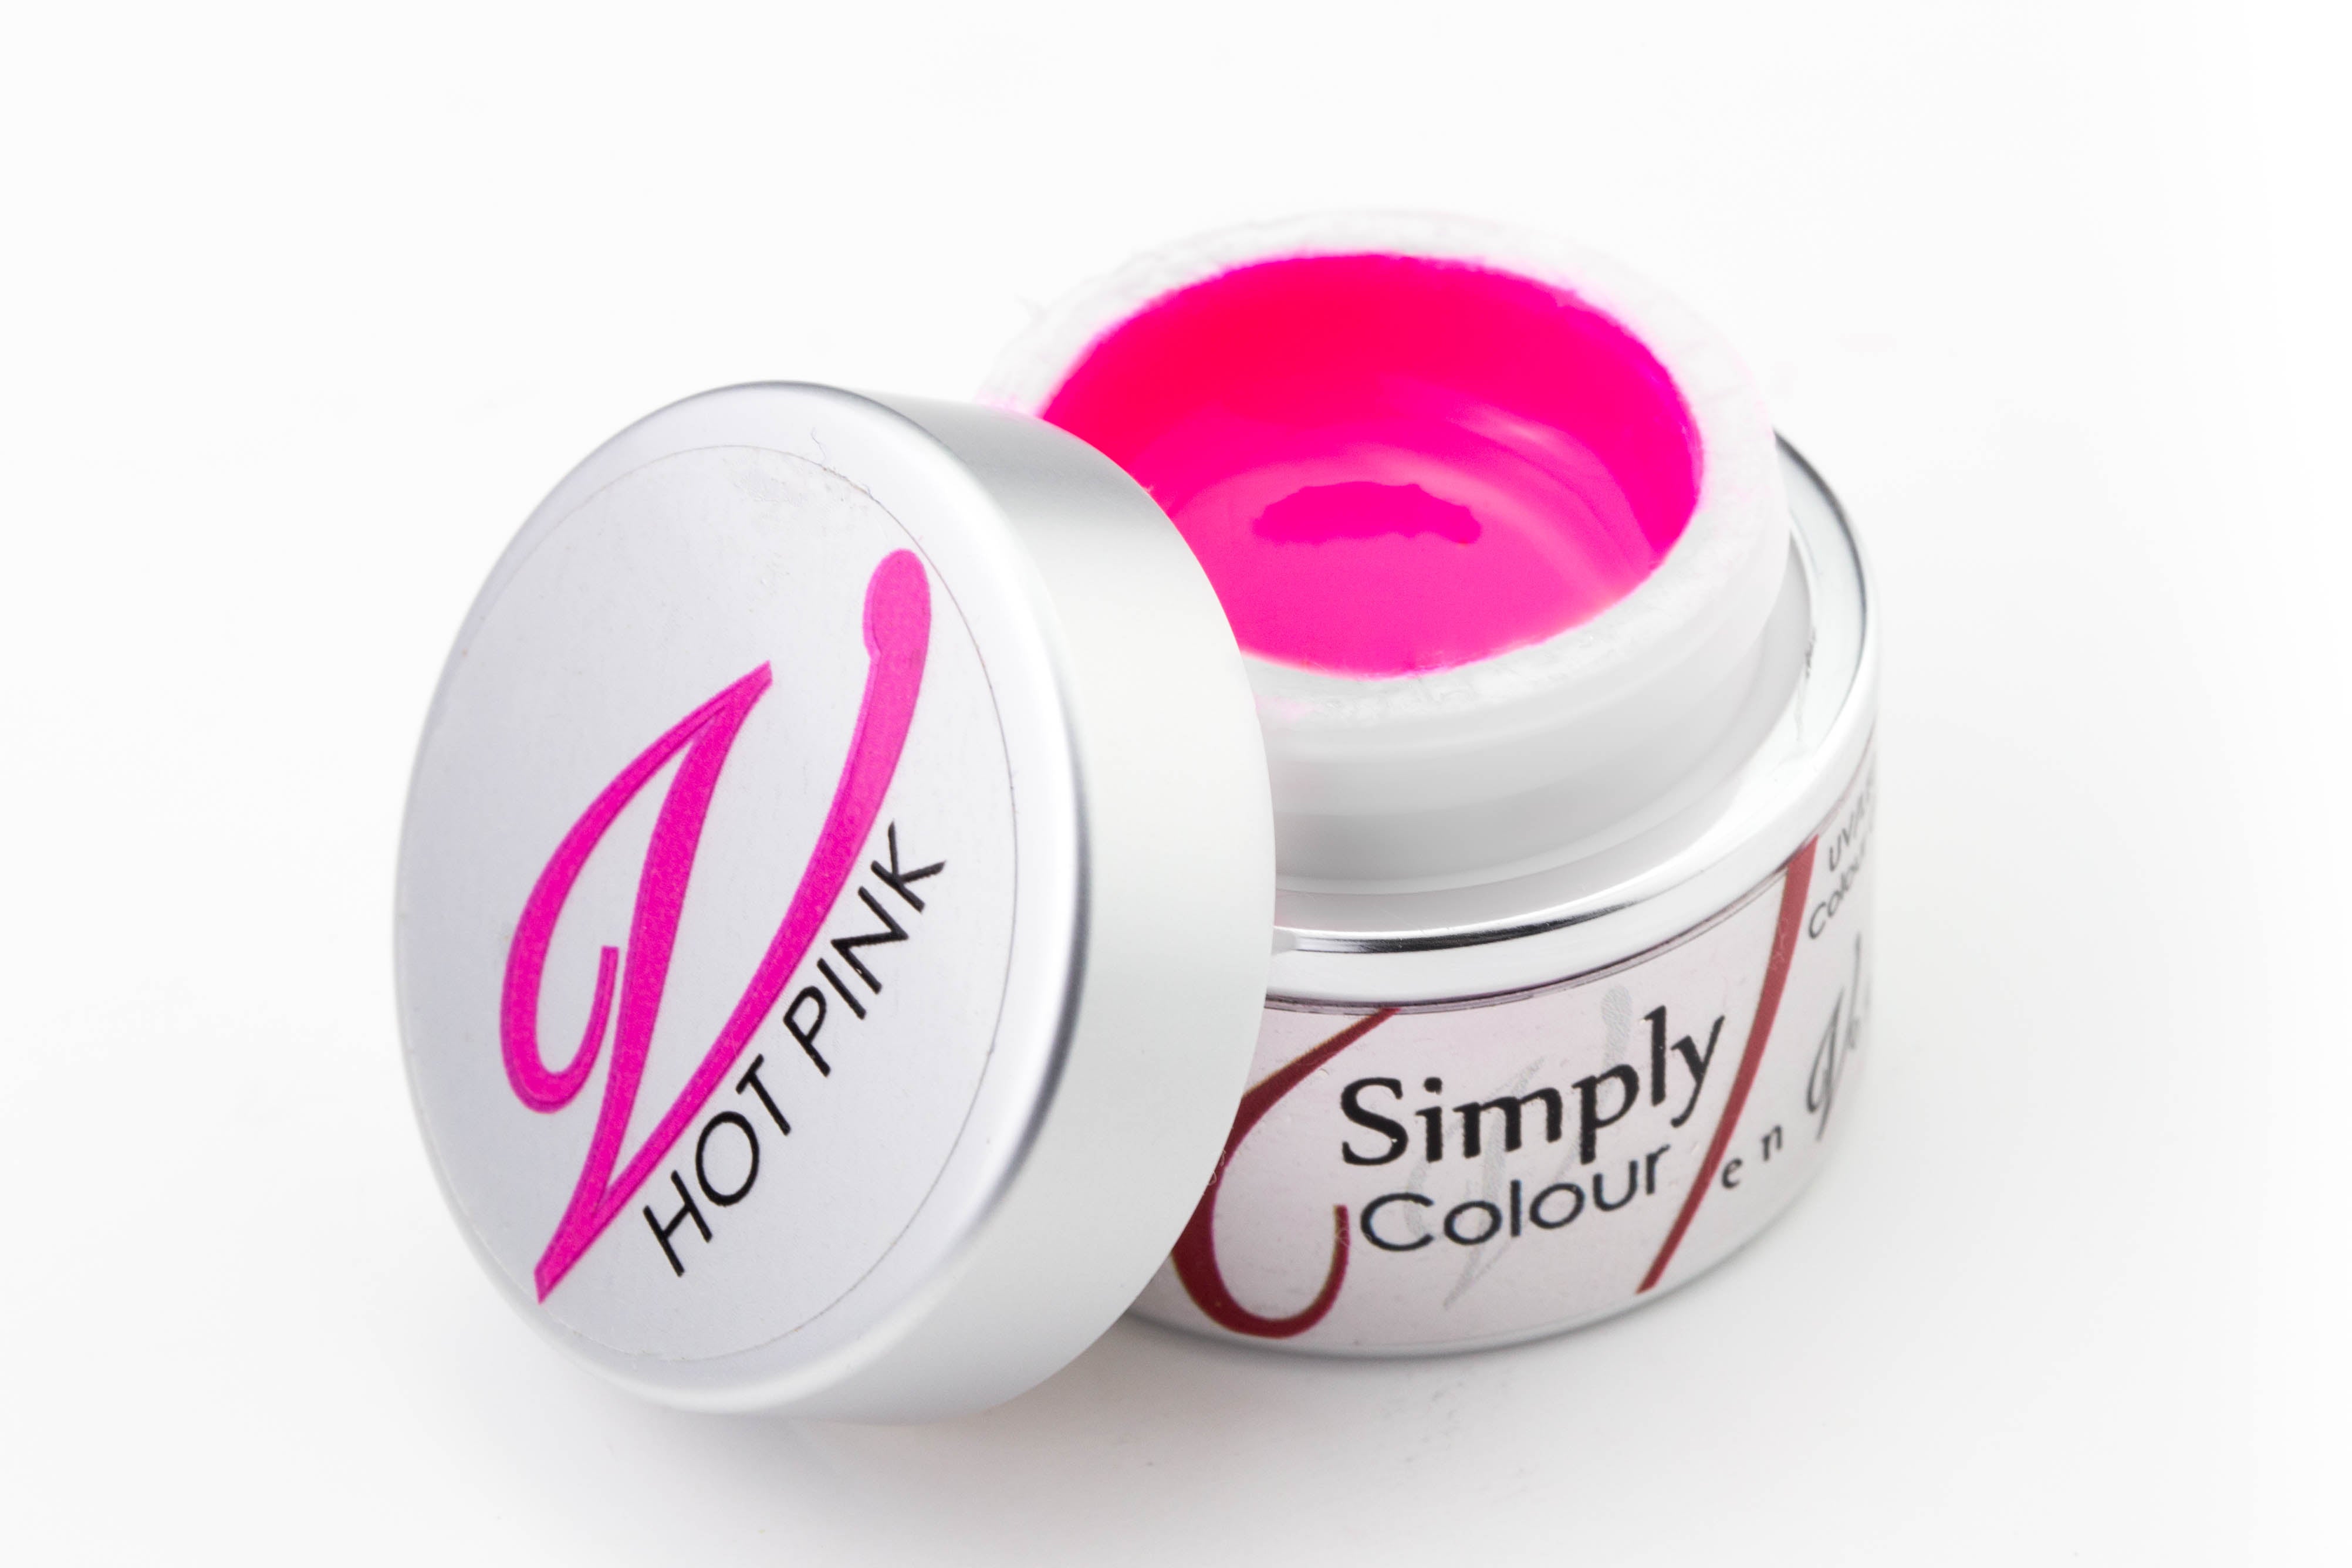 En Vogue Simply Colour Gel - Hot Pink - Creata Beauty - Professional Beauty Products